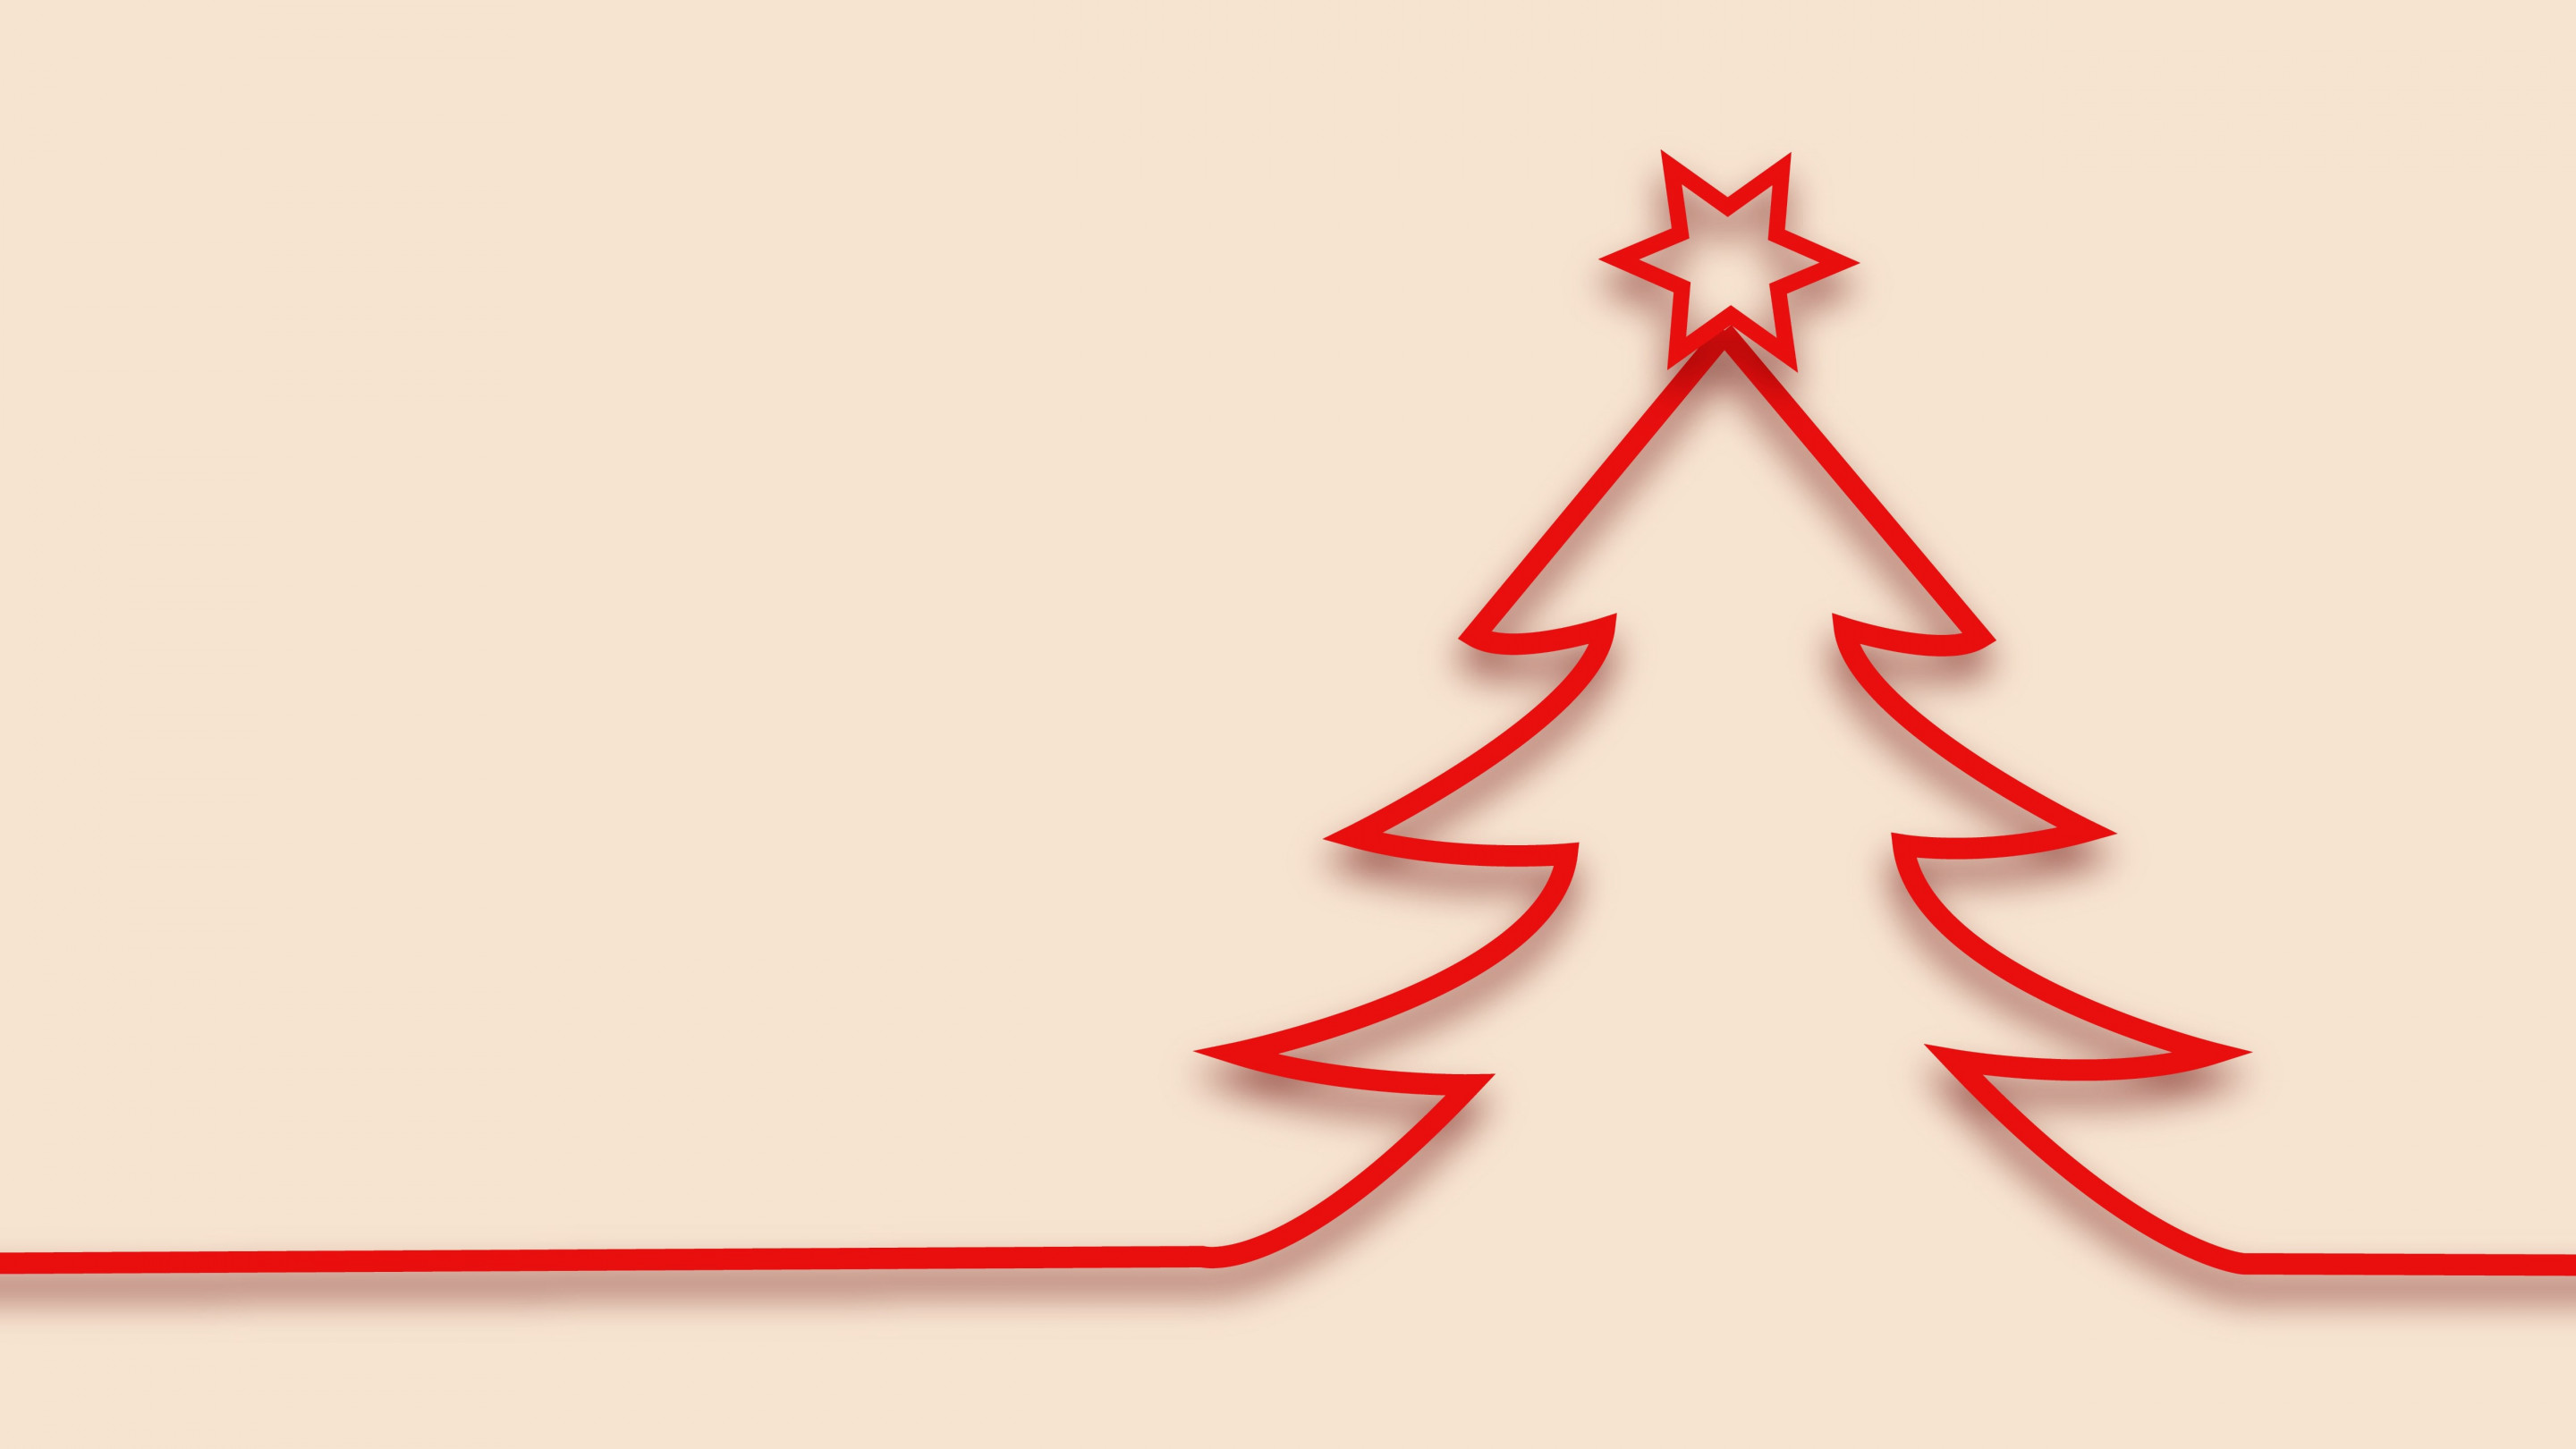 Red minimalistic Christmas tree design wallpaper 2880x1620